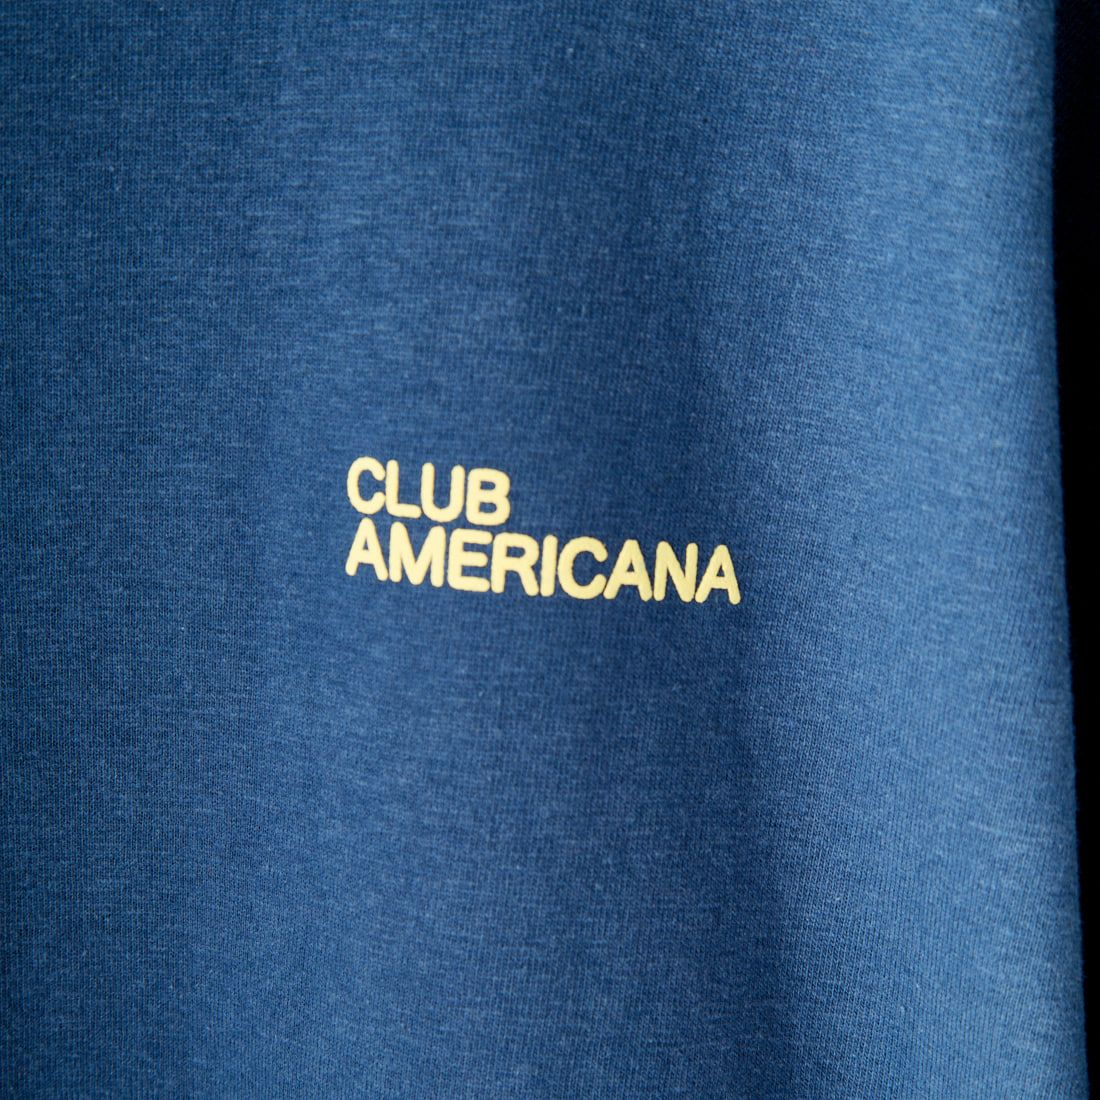 Americana × JEANS FACTORY [アメリカーナ × ジーンズファクトリー] 別注 ワイドショートバックプリントTシャツ [ASO-M-699-1-JF] ﾌﾞﾙ-